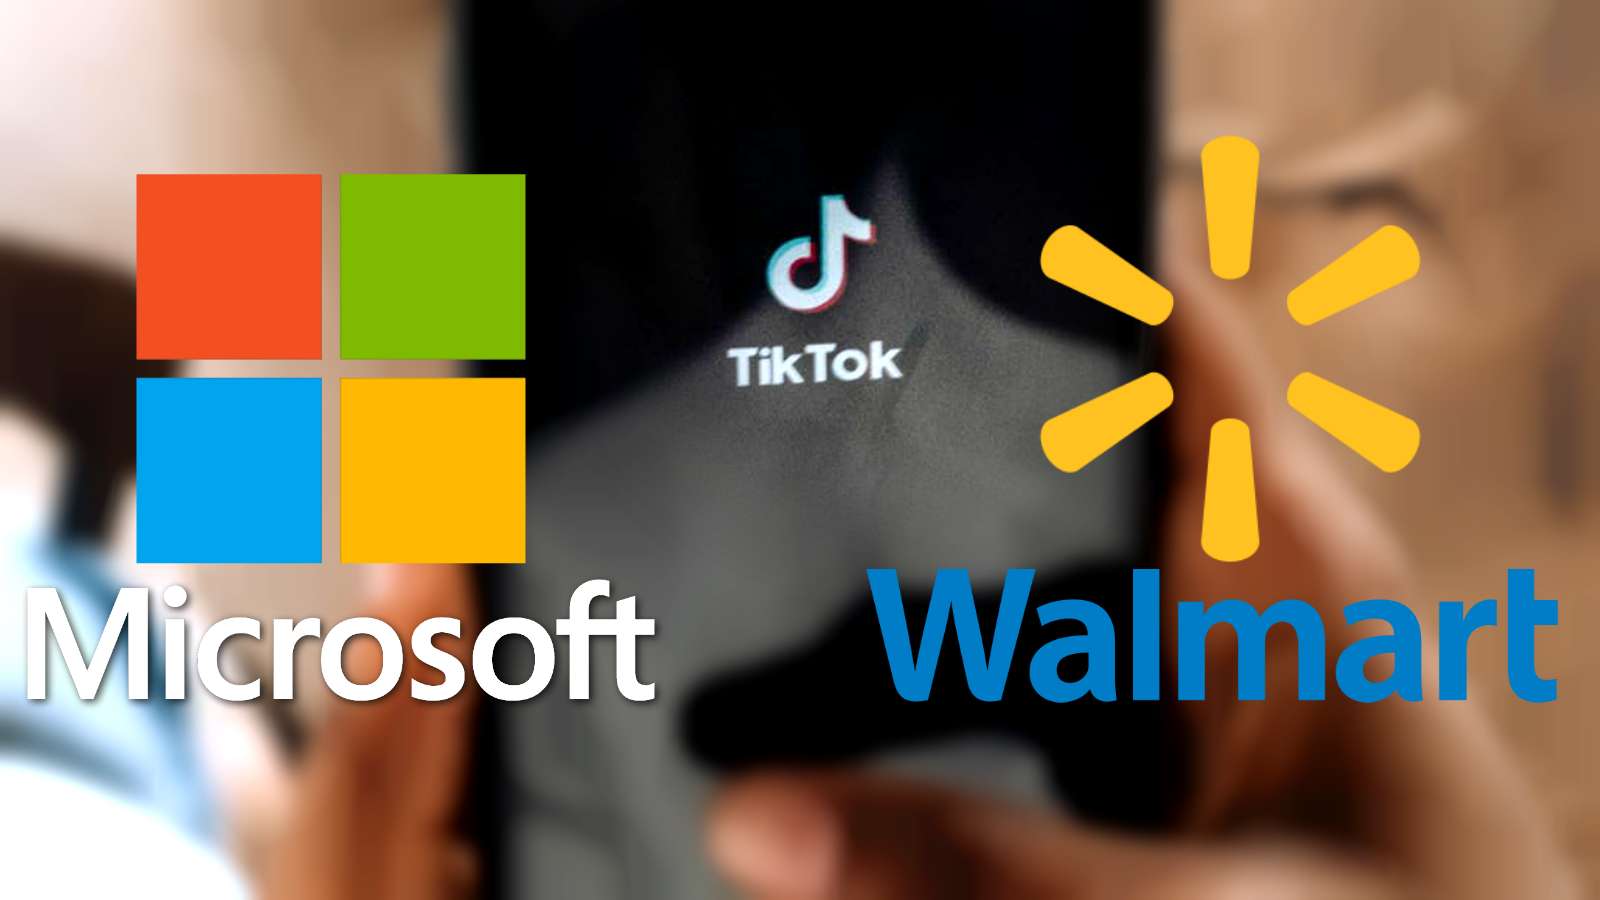 Walmart and TikTok and Microsoft